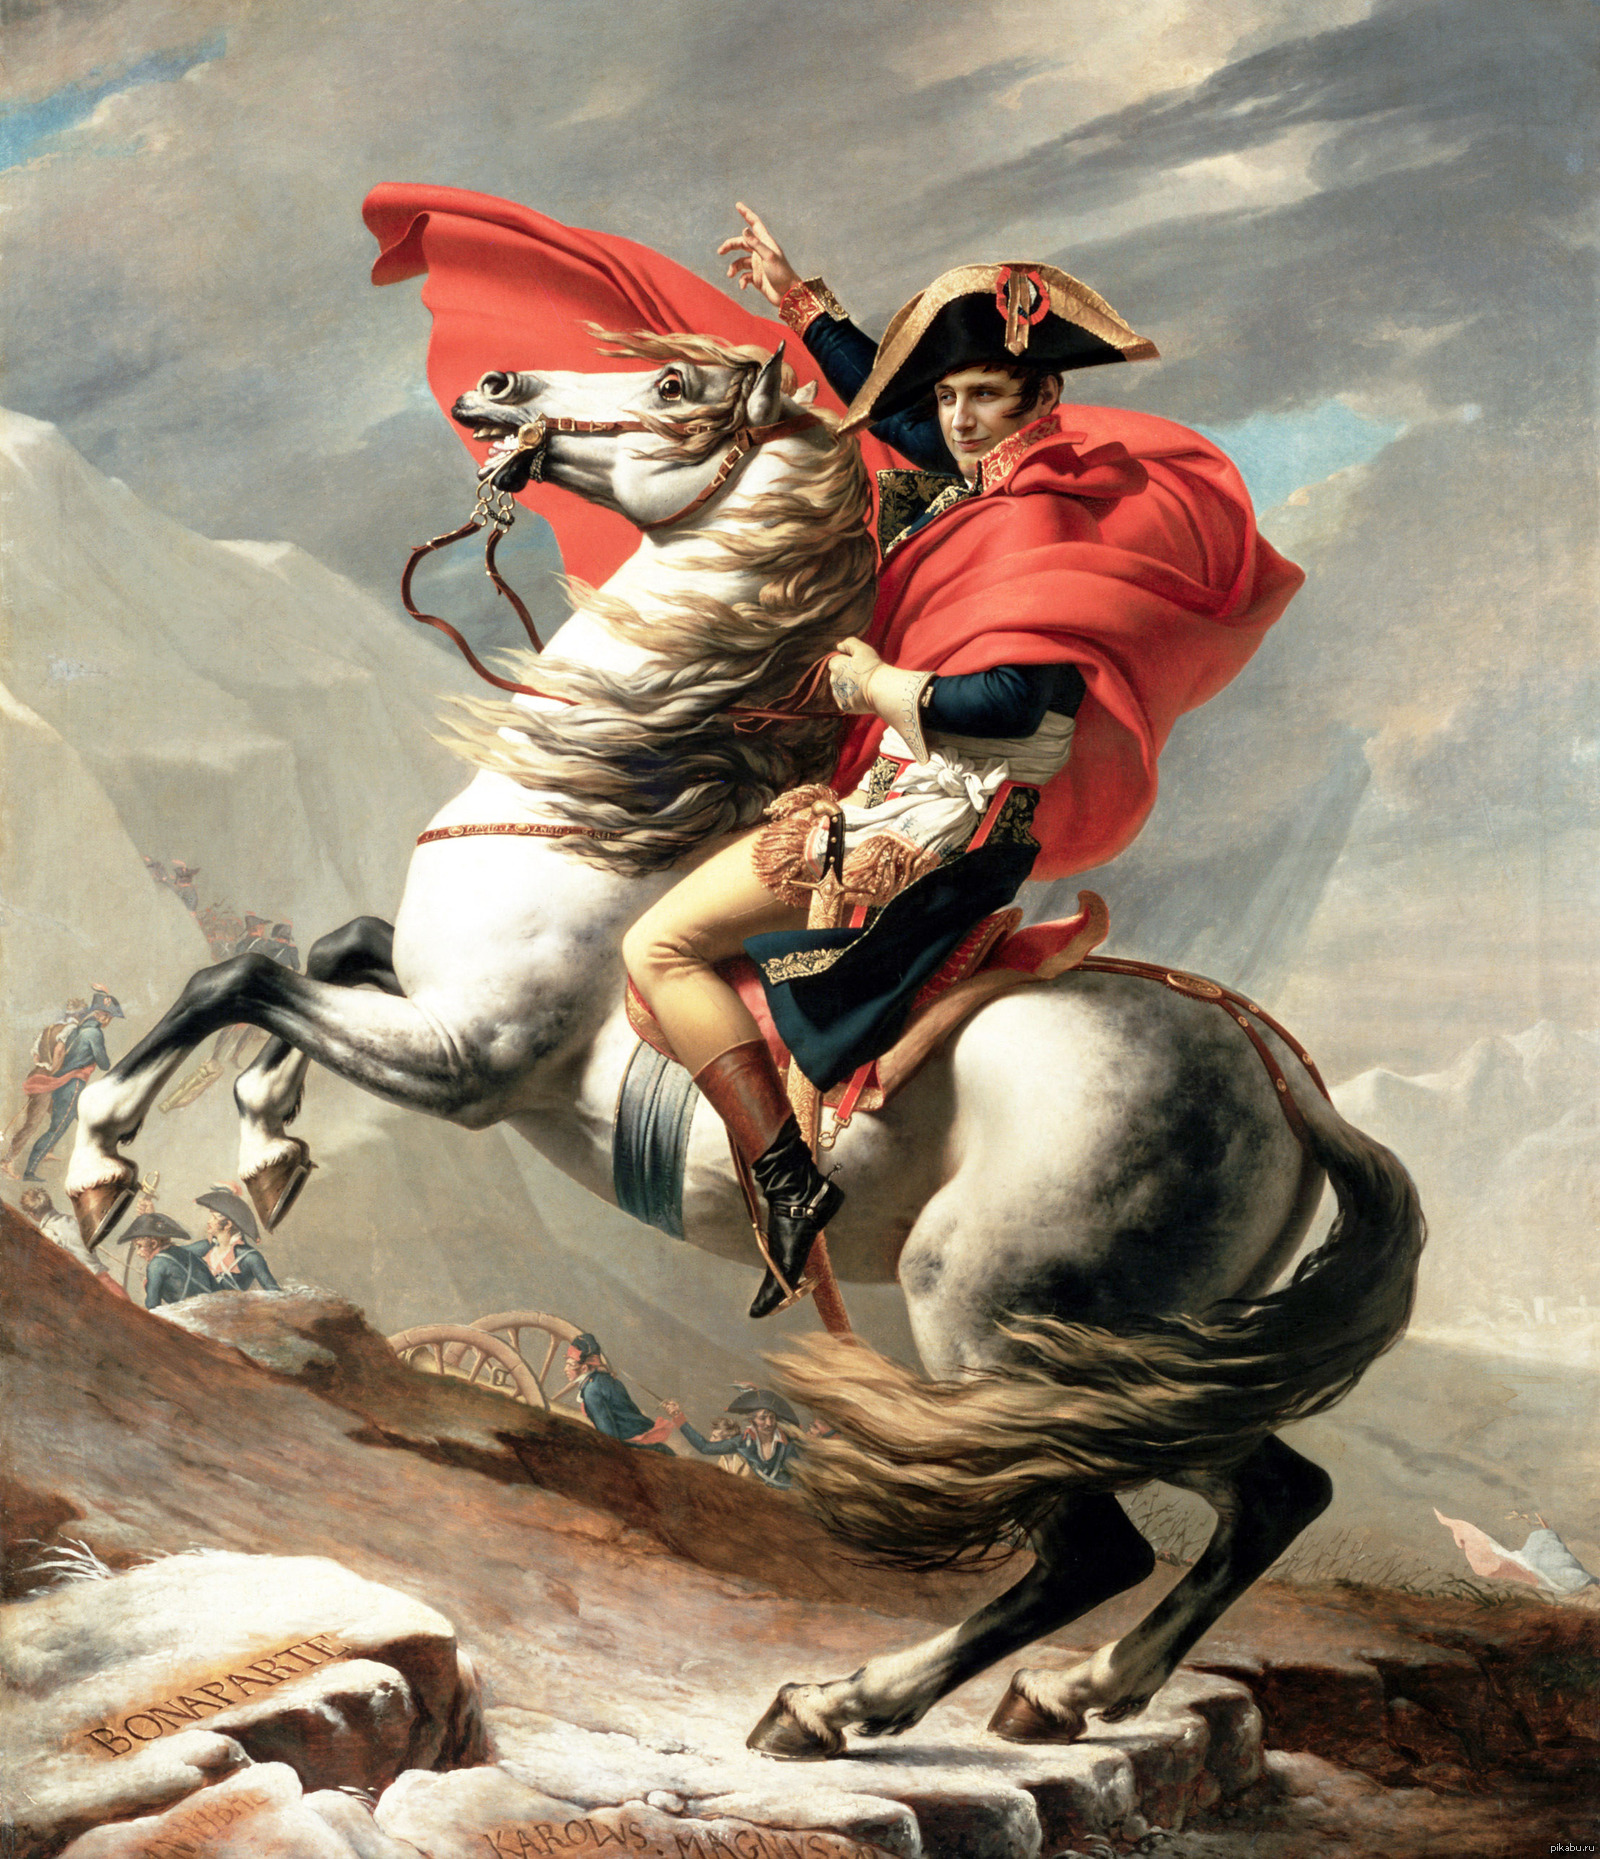 Реферат: Наполеон I